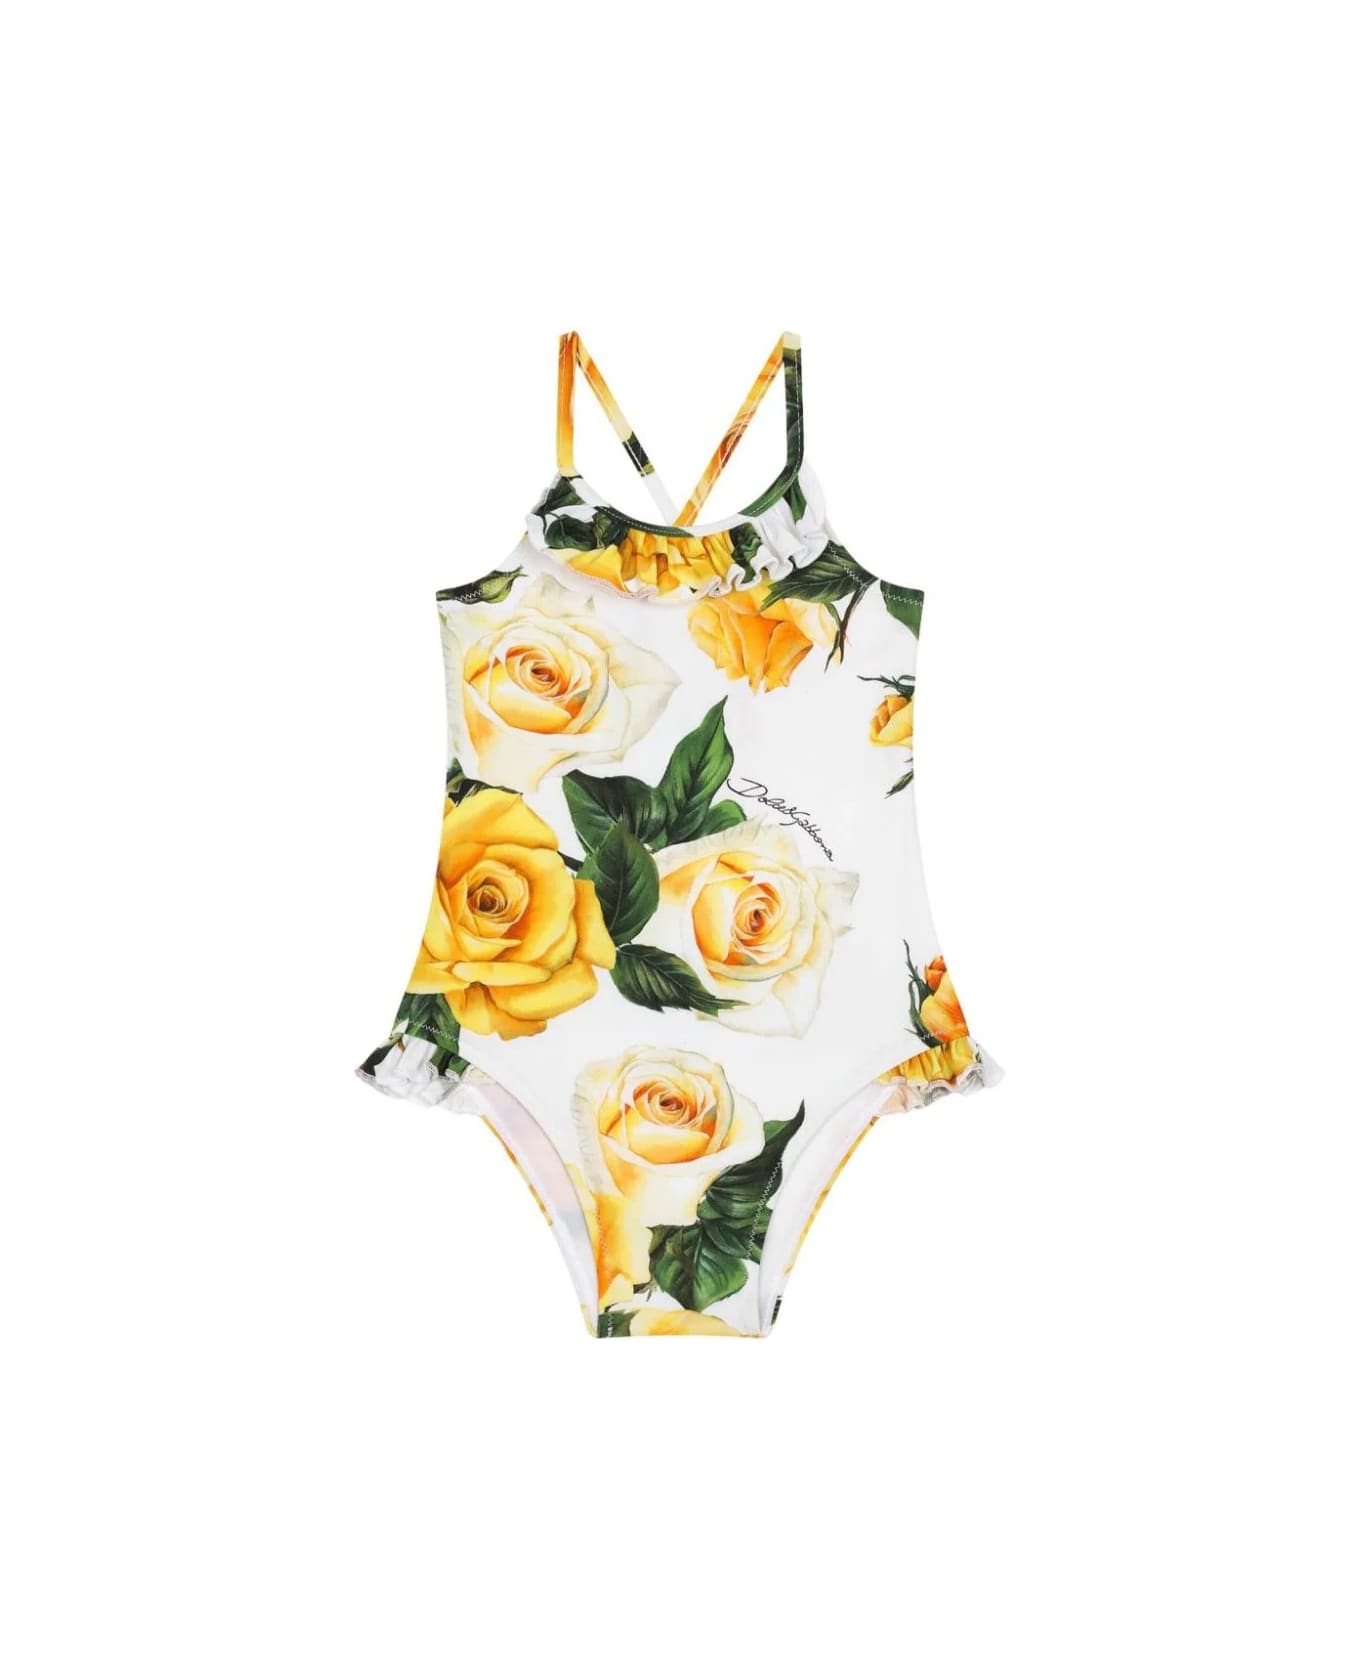 Dolce & Gabbana White One-piece Swimwear With Yellow Rose Print - Yellow